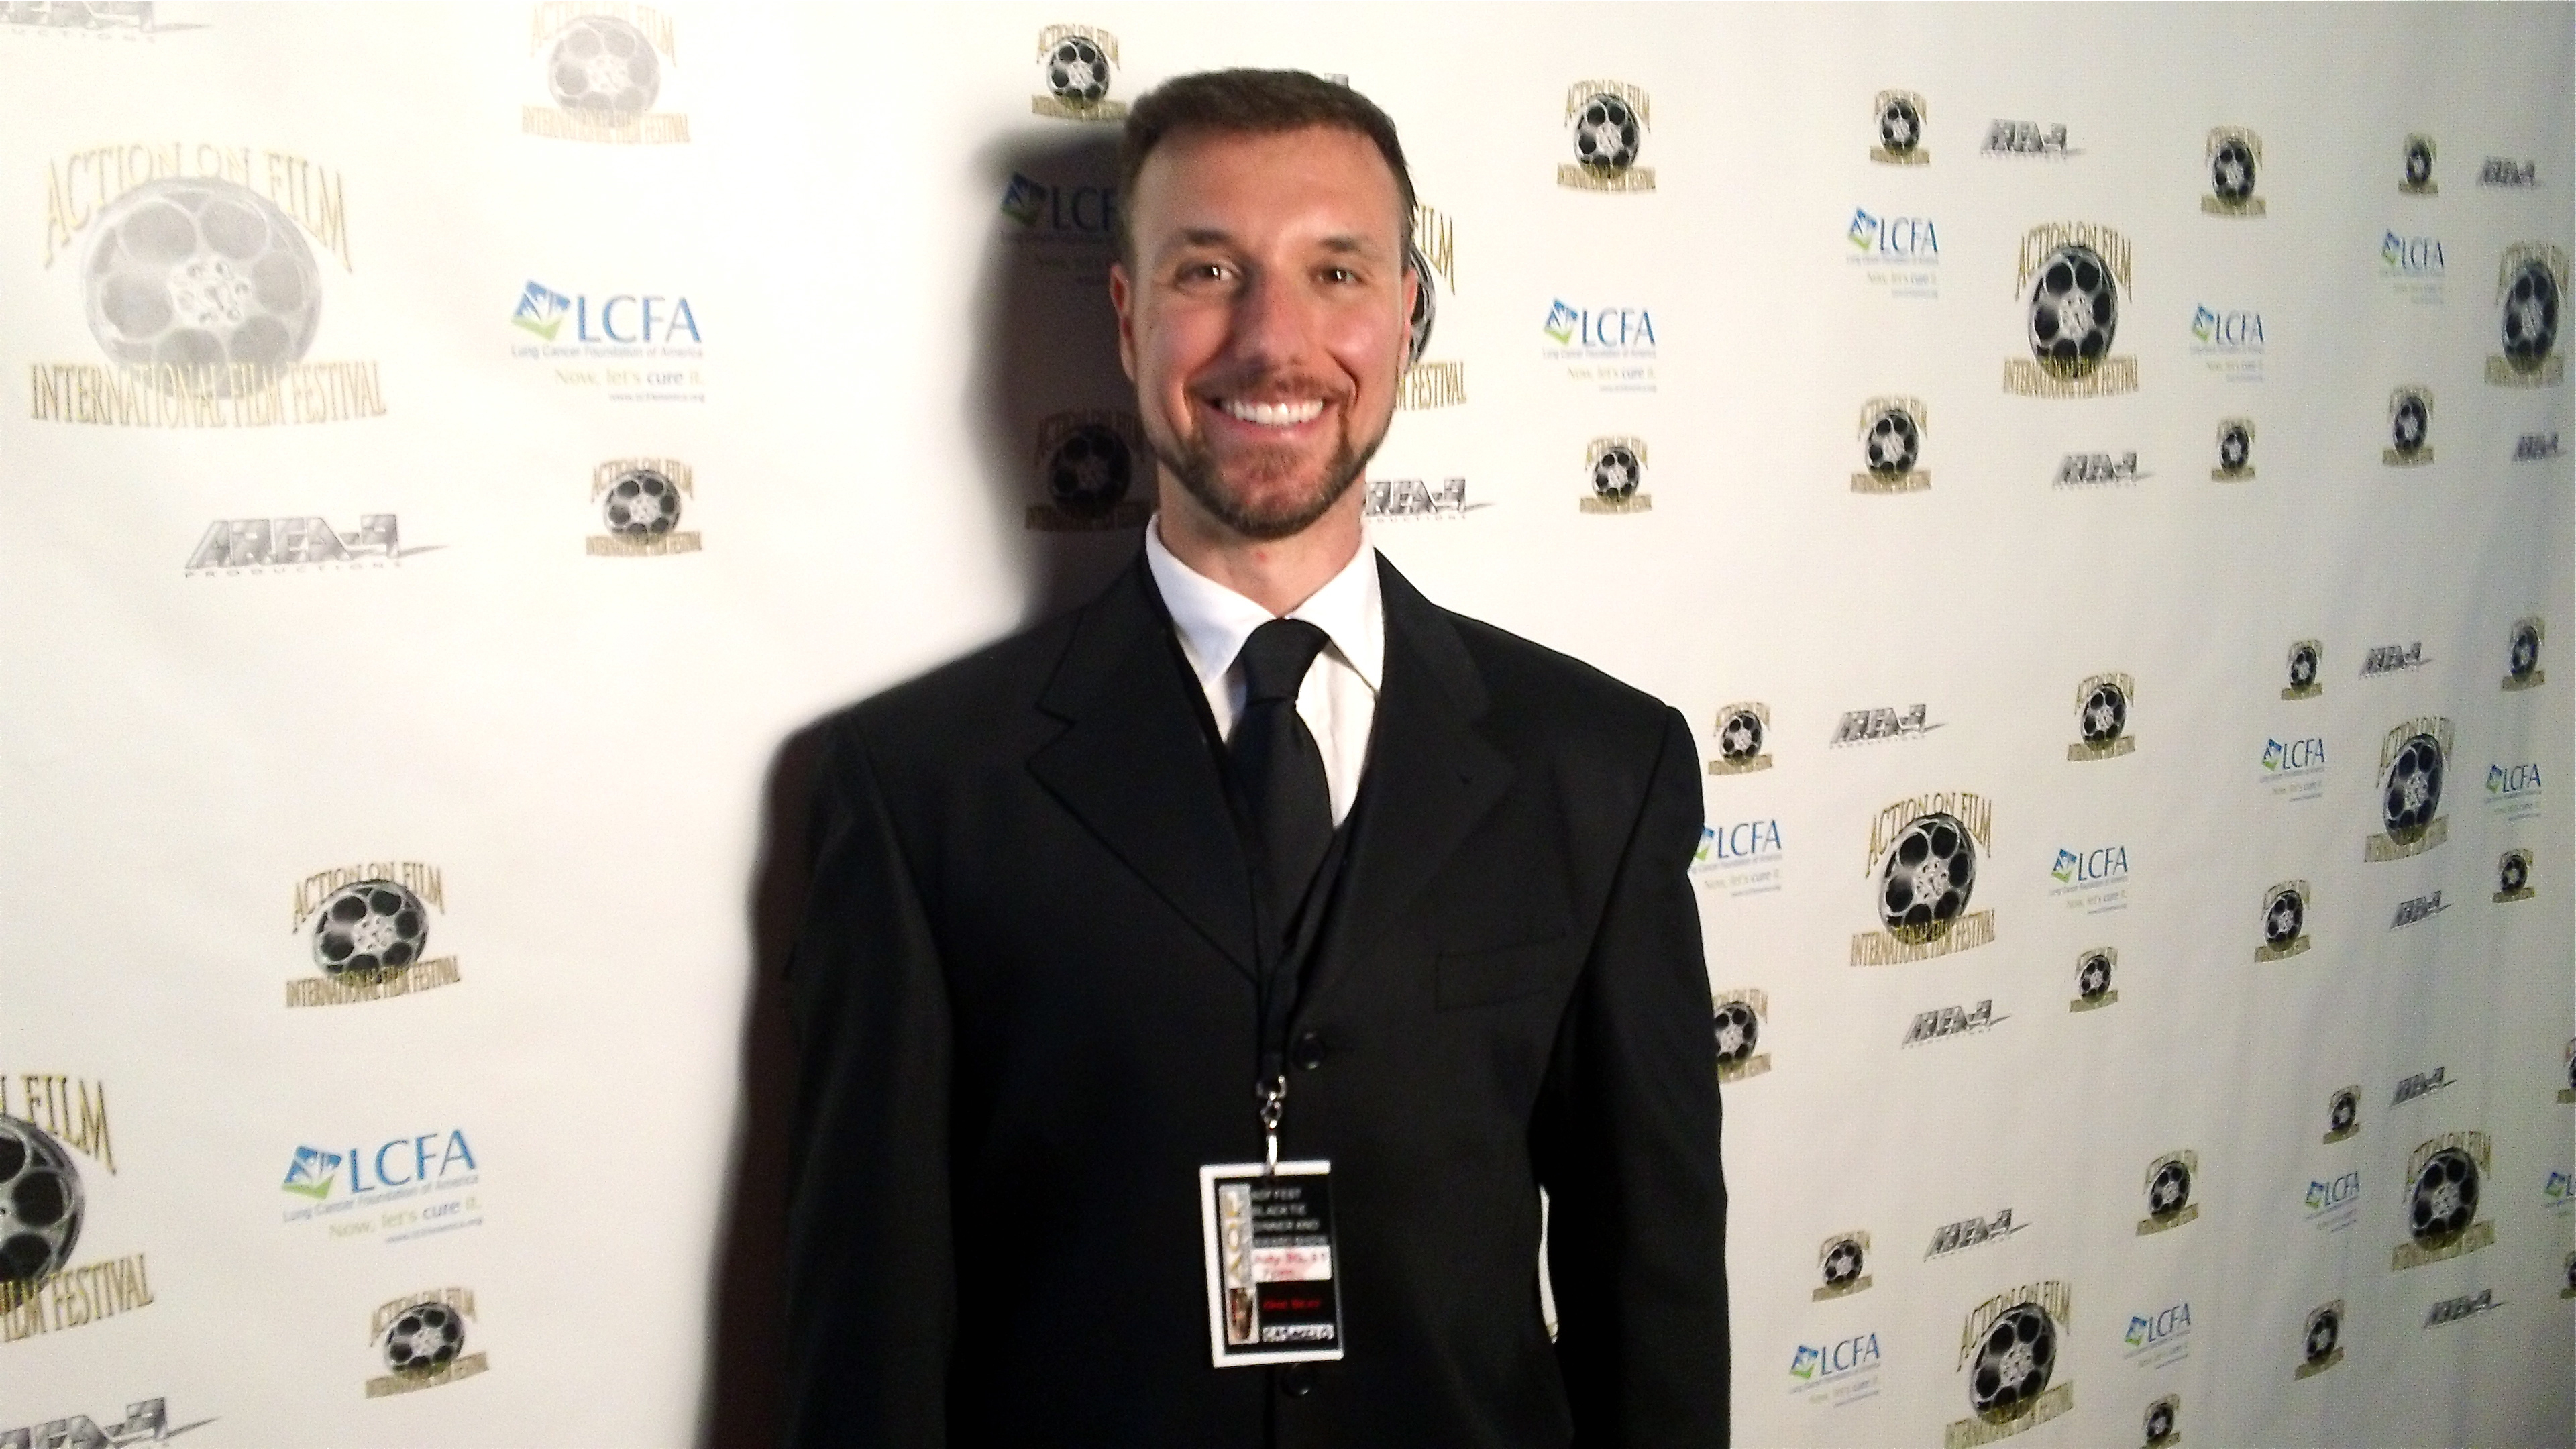 Eric Casaccio at the Action On Film International Film Festival Awards representing 